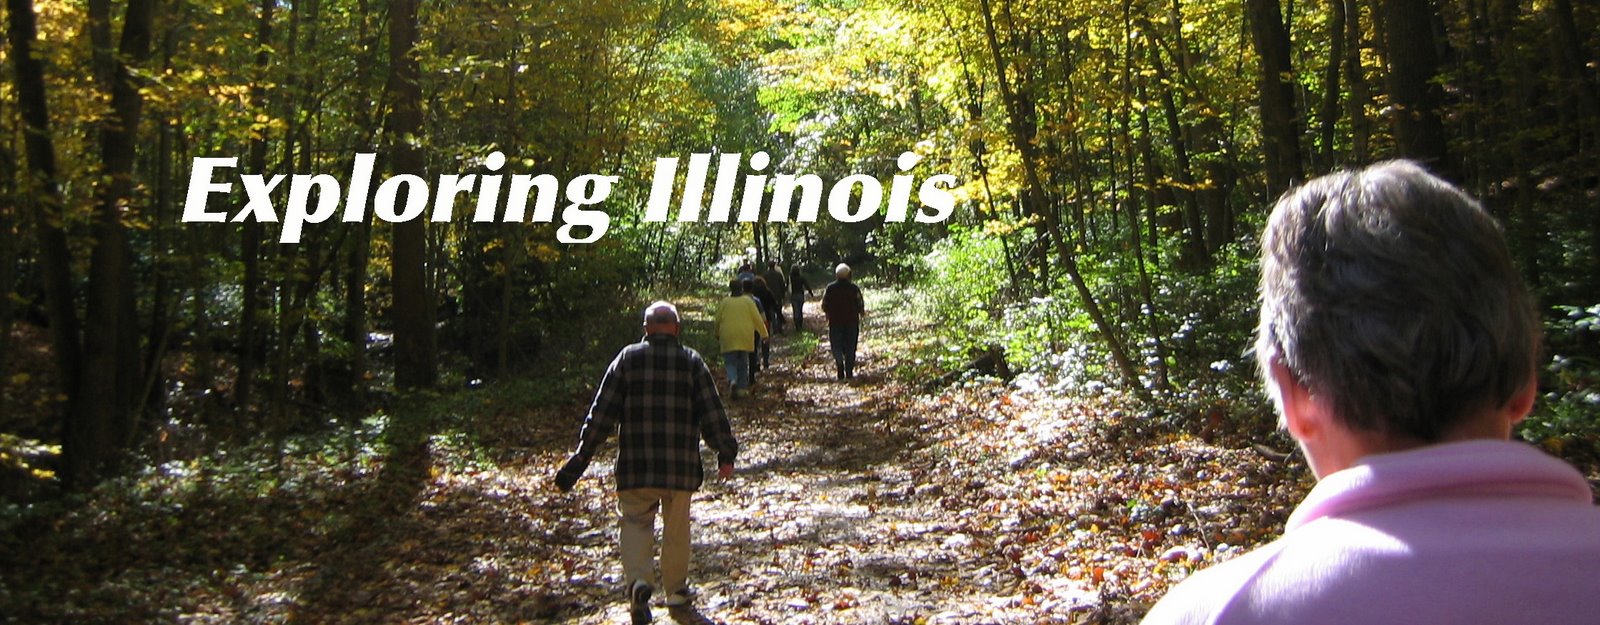 Exploring Illinois by Rich Moreno